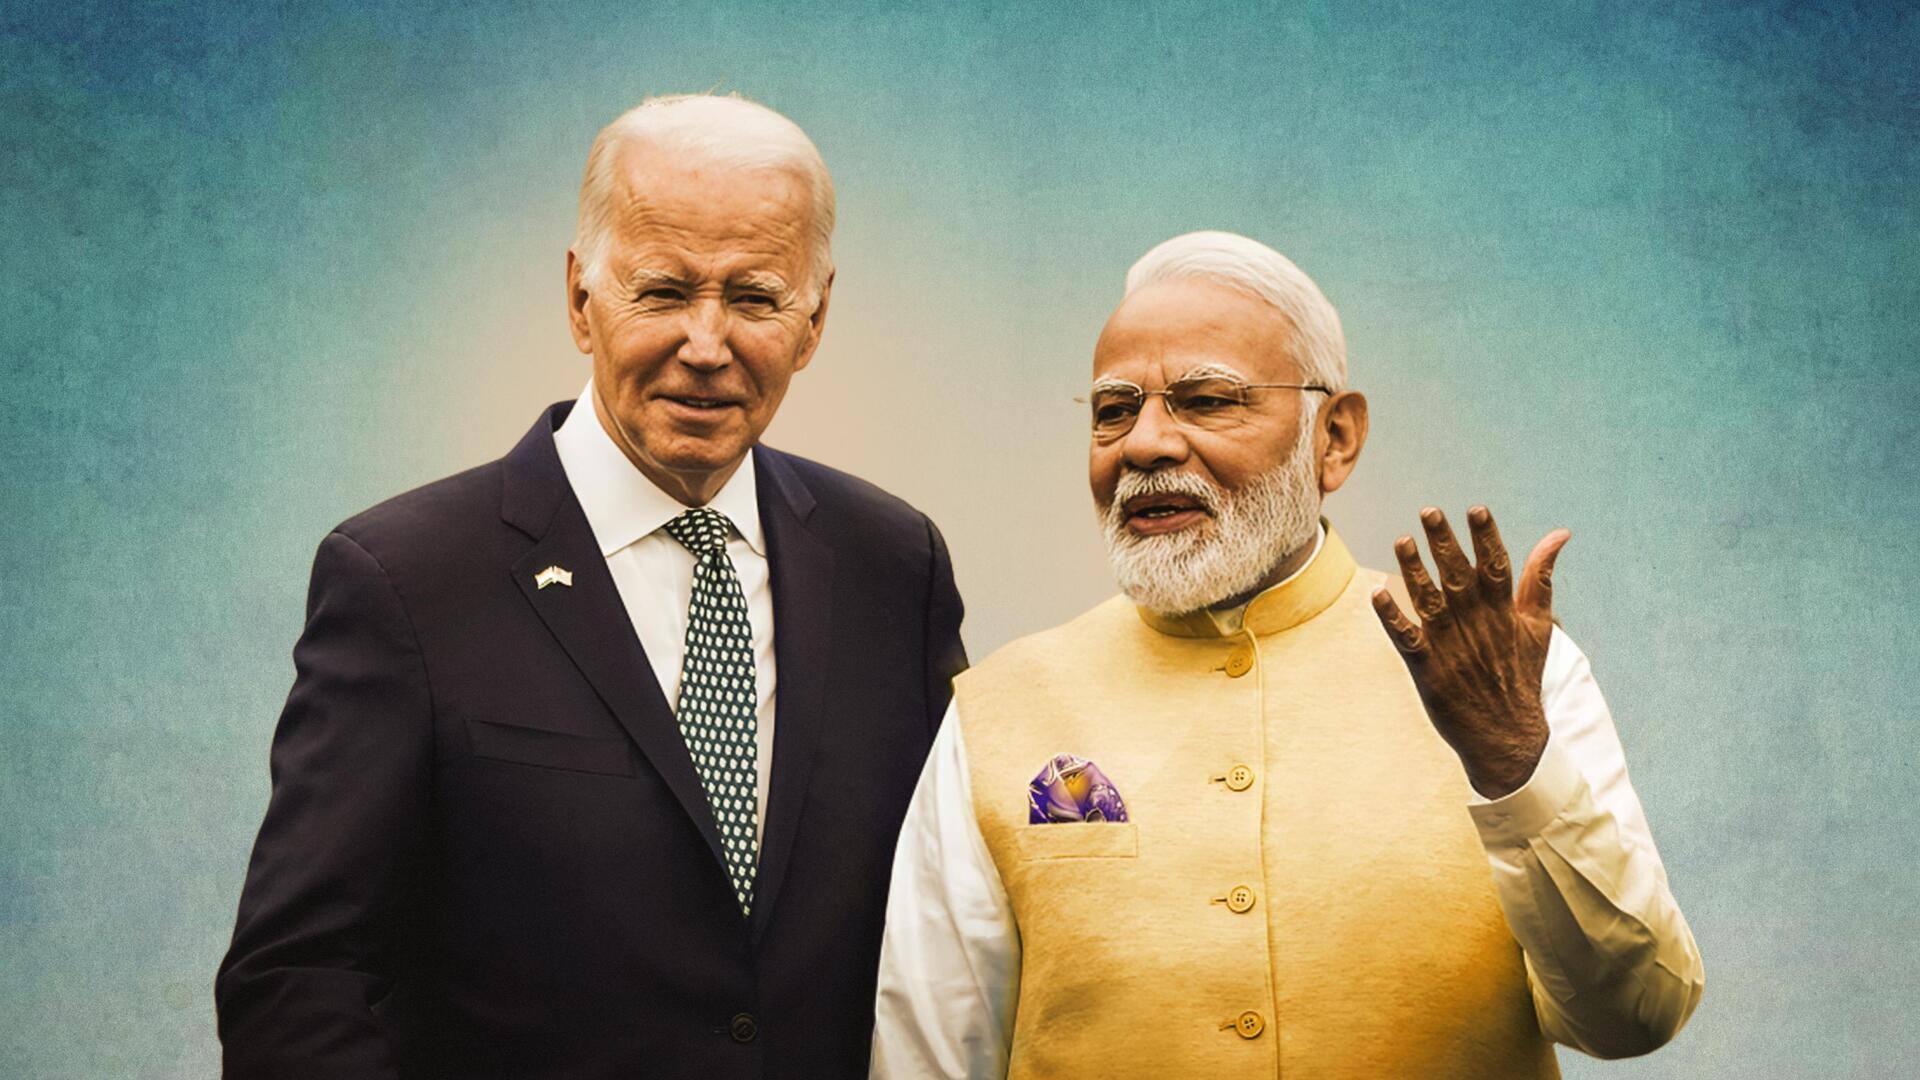 G20 Summit: Modi-Biden bilateral meeting on Friday, says White House